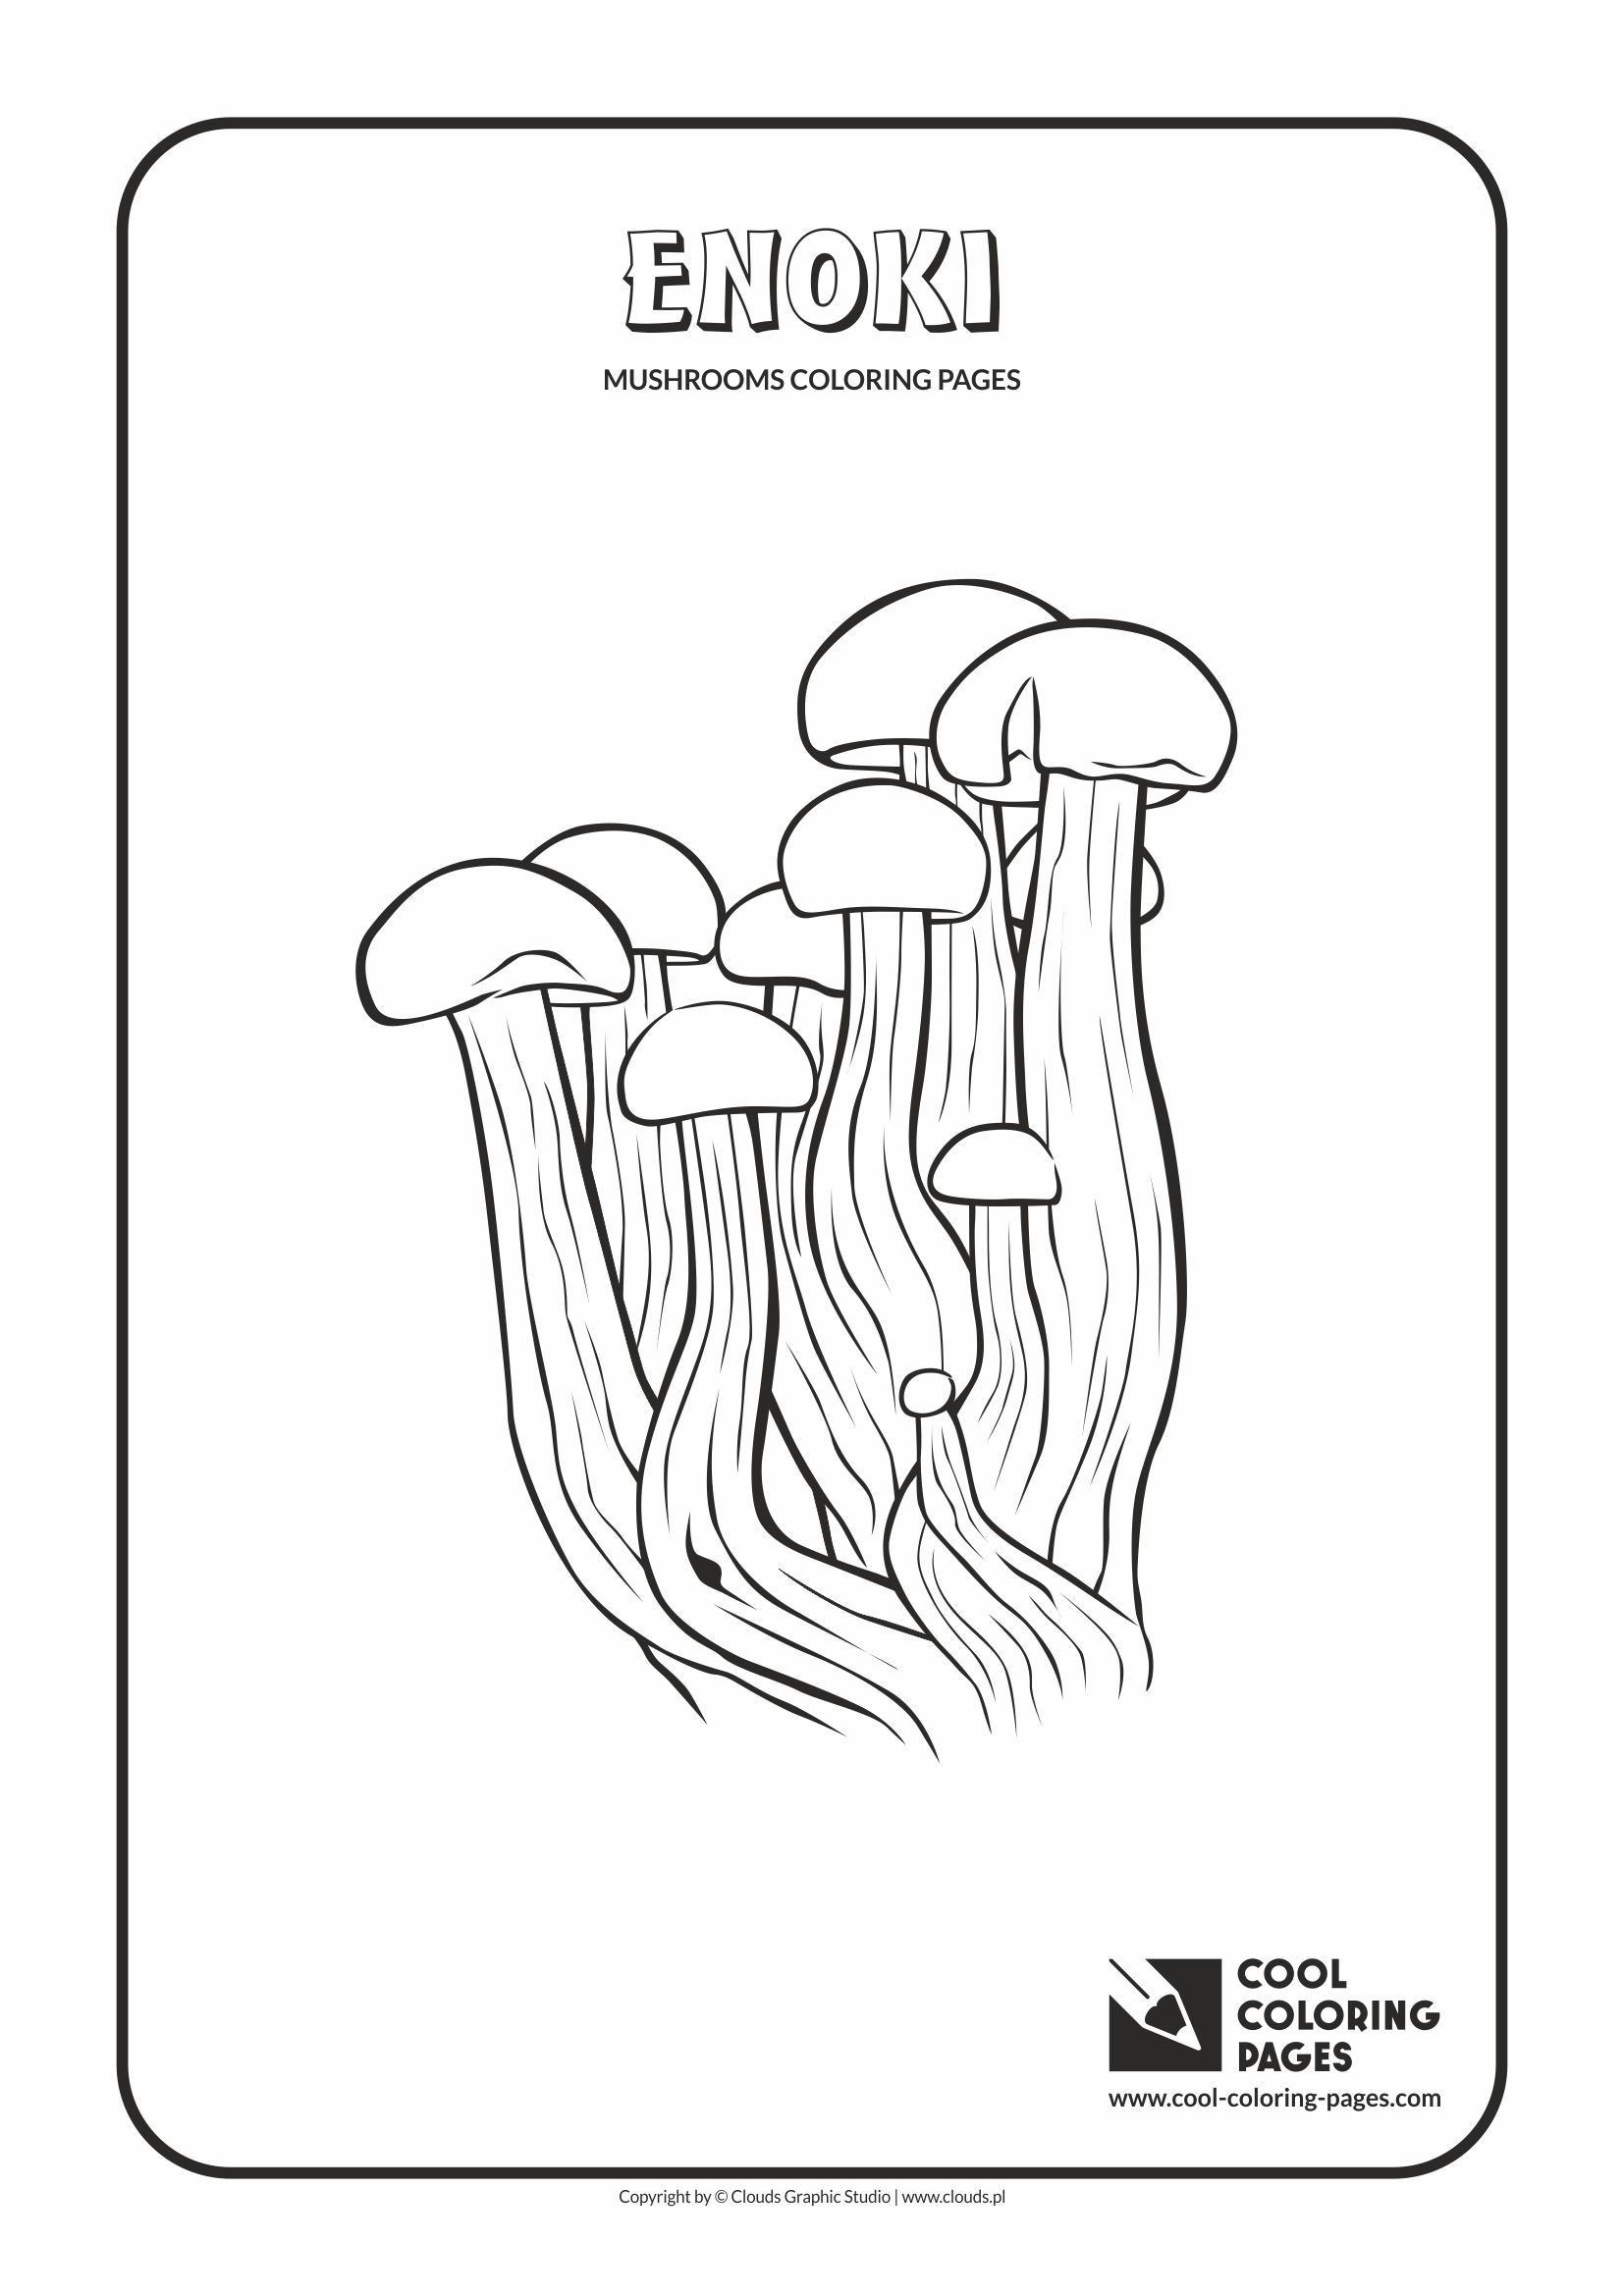 Cool Coloring Pages - Mushrooms / Enoki / Coloring page with enoki